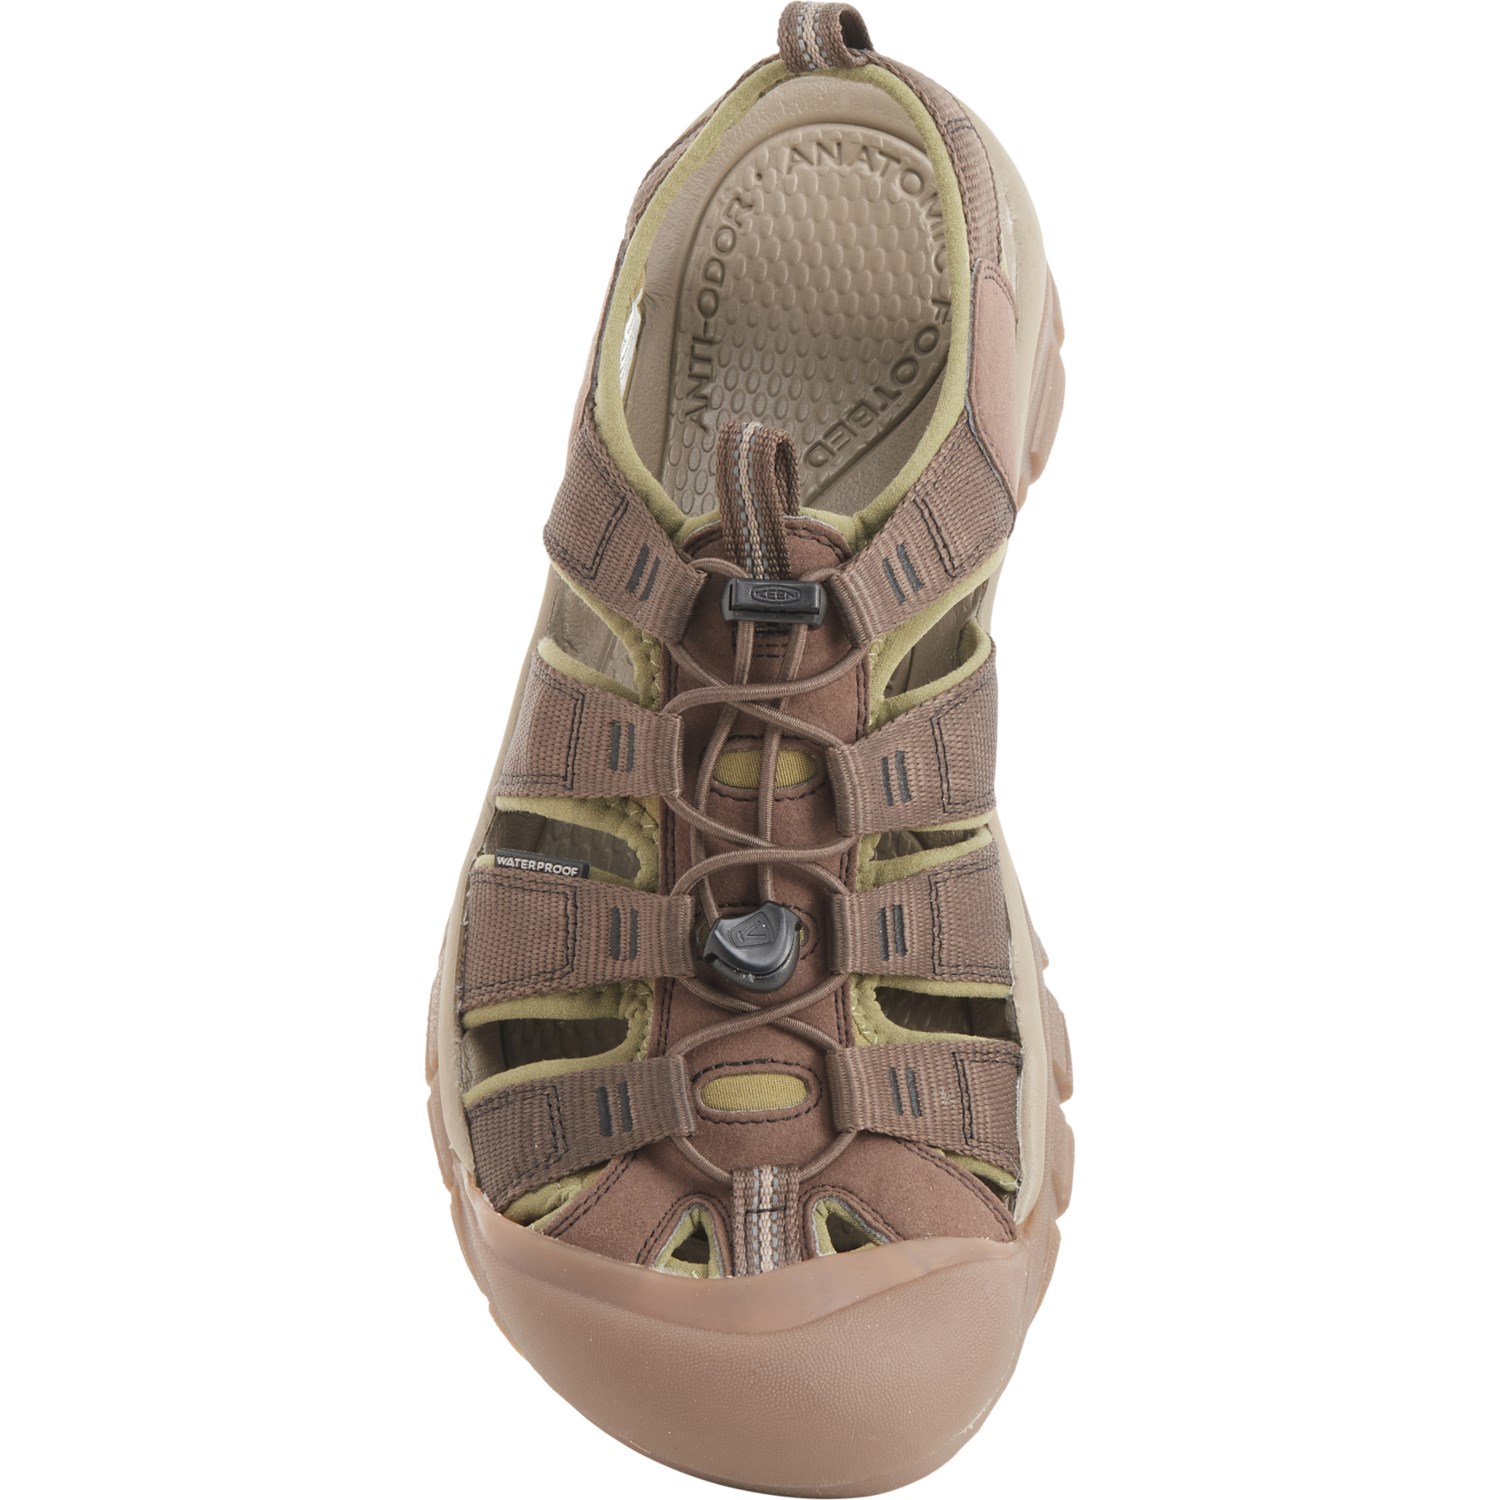 Keen Newport H2 Sport Sandals (For Men) - Save 37%